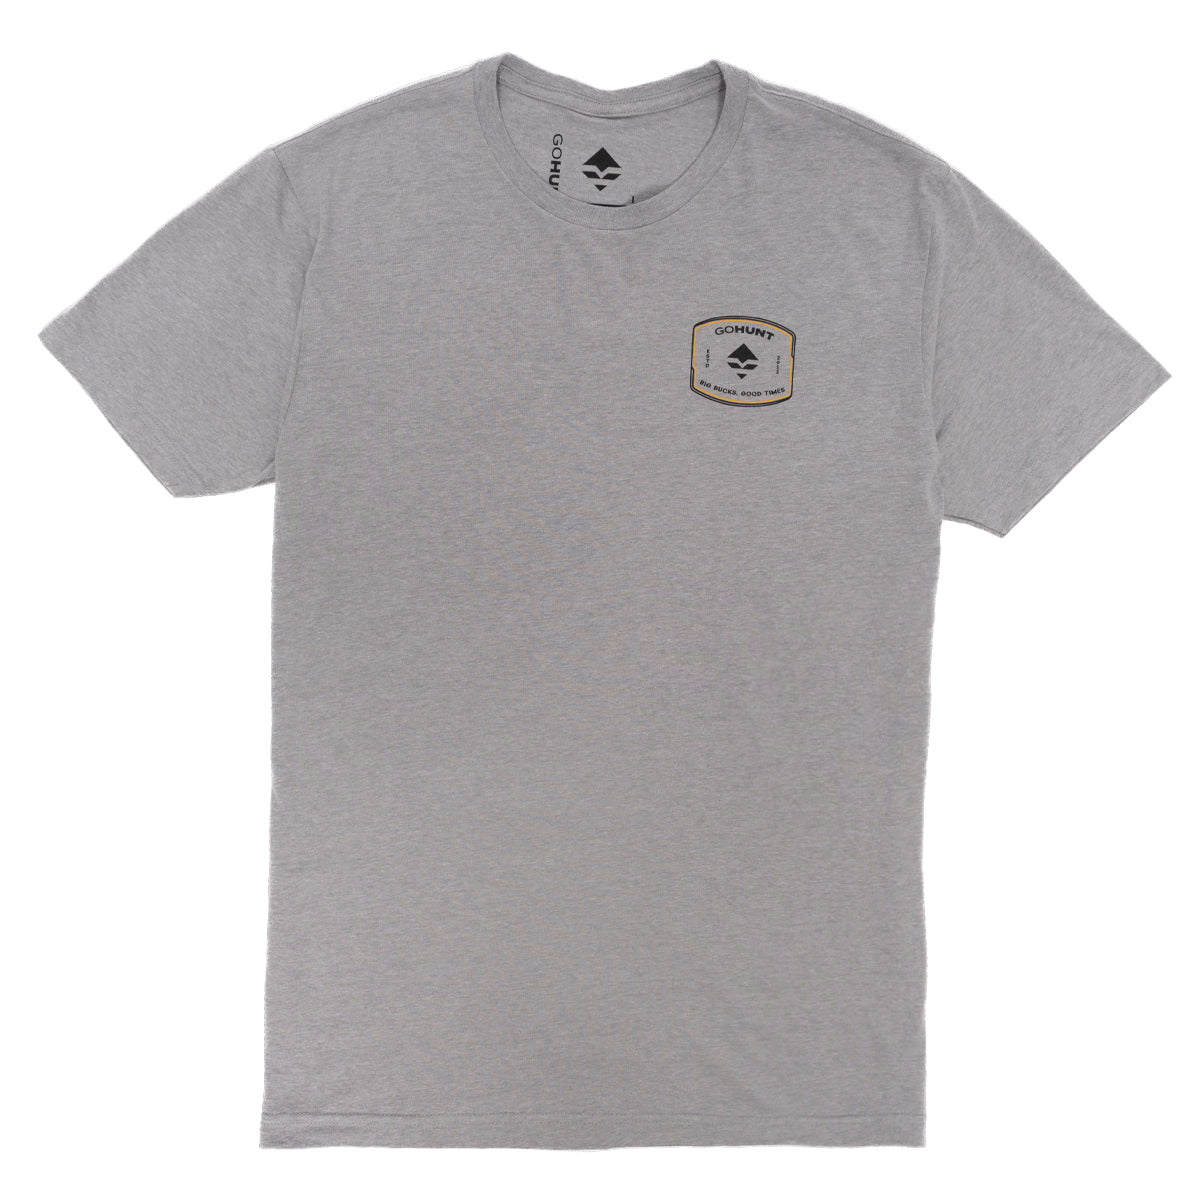 GOHUNT Origin T-Shirt in  by GOHUNT | GOHUNT - GOHUNT Shop